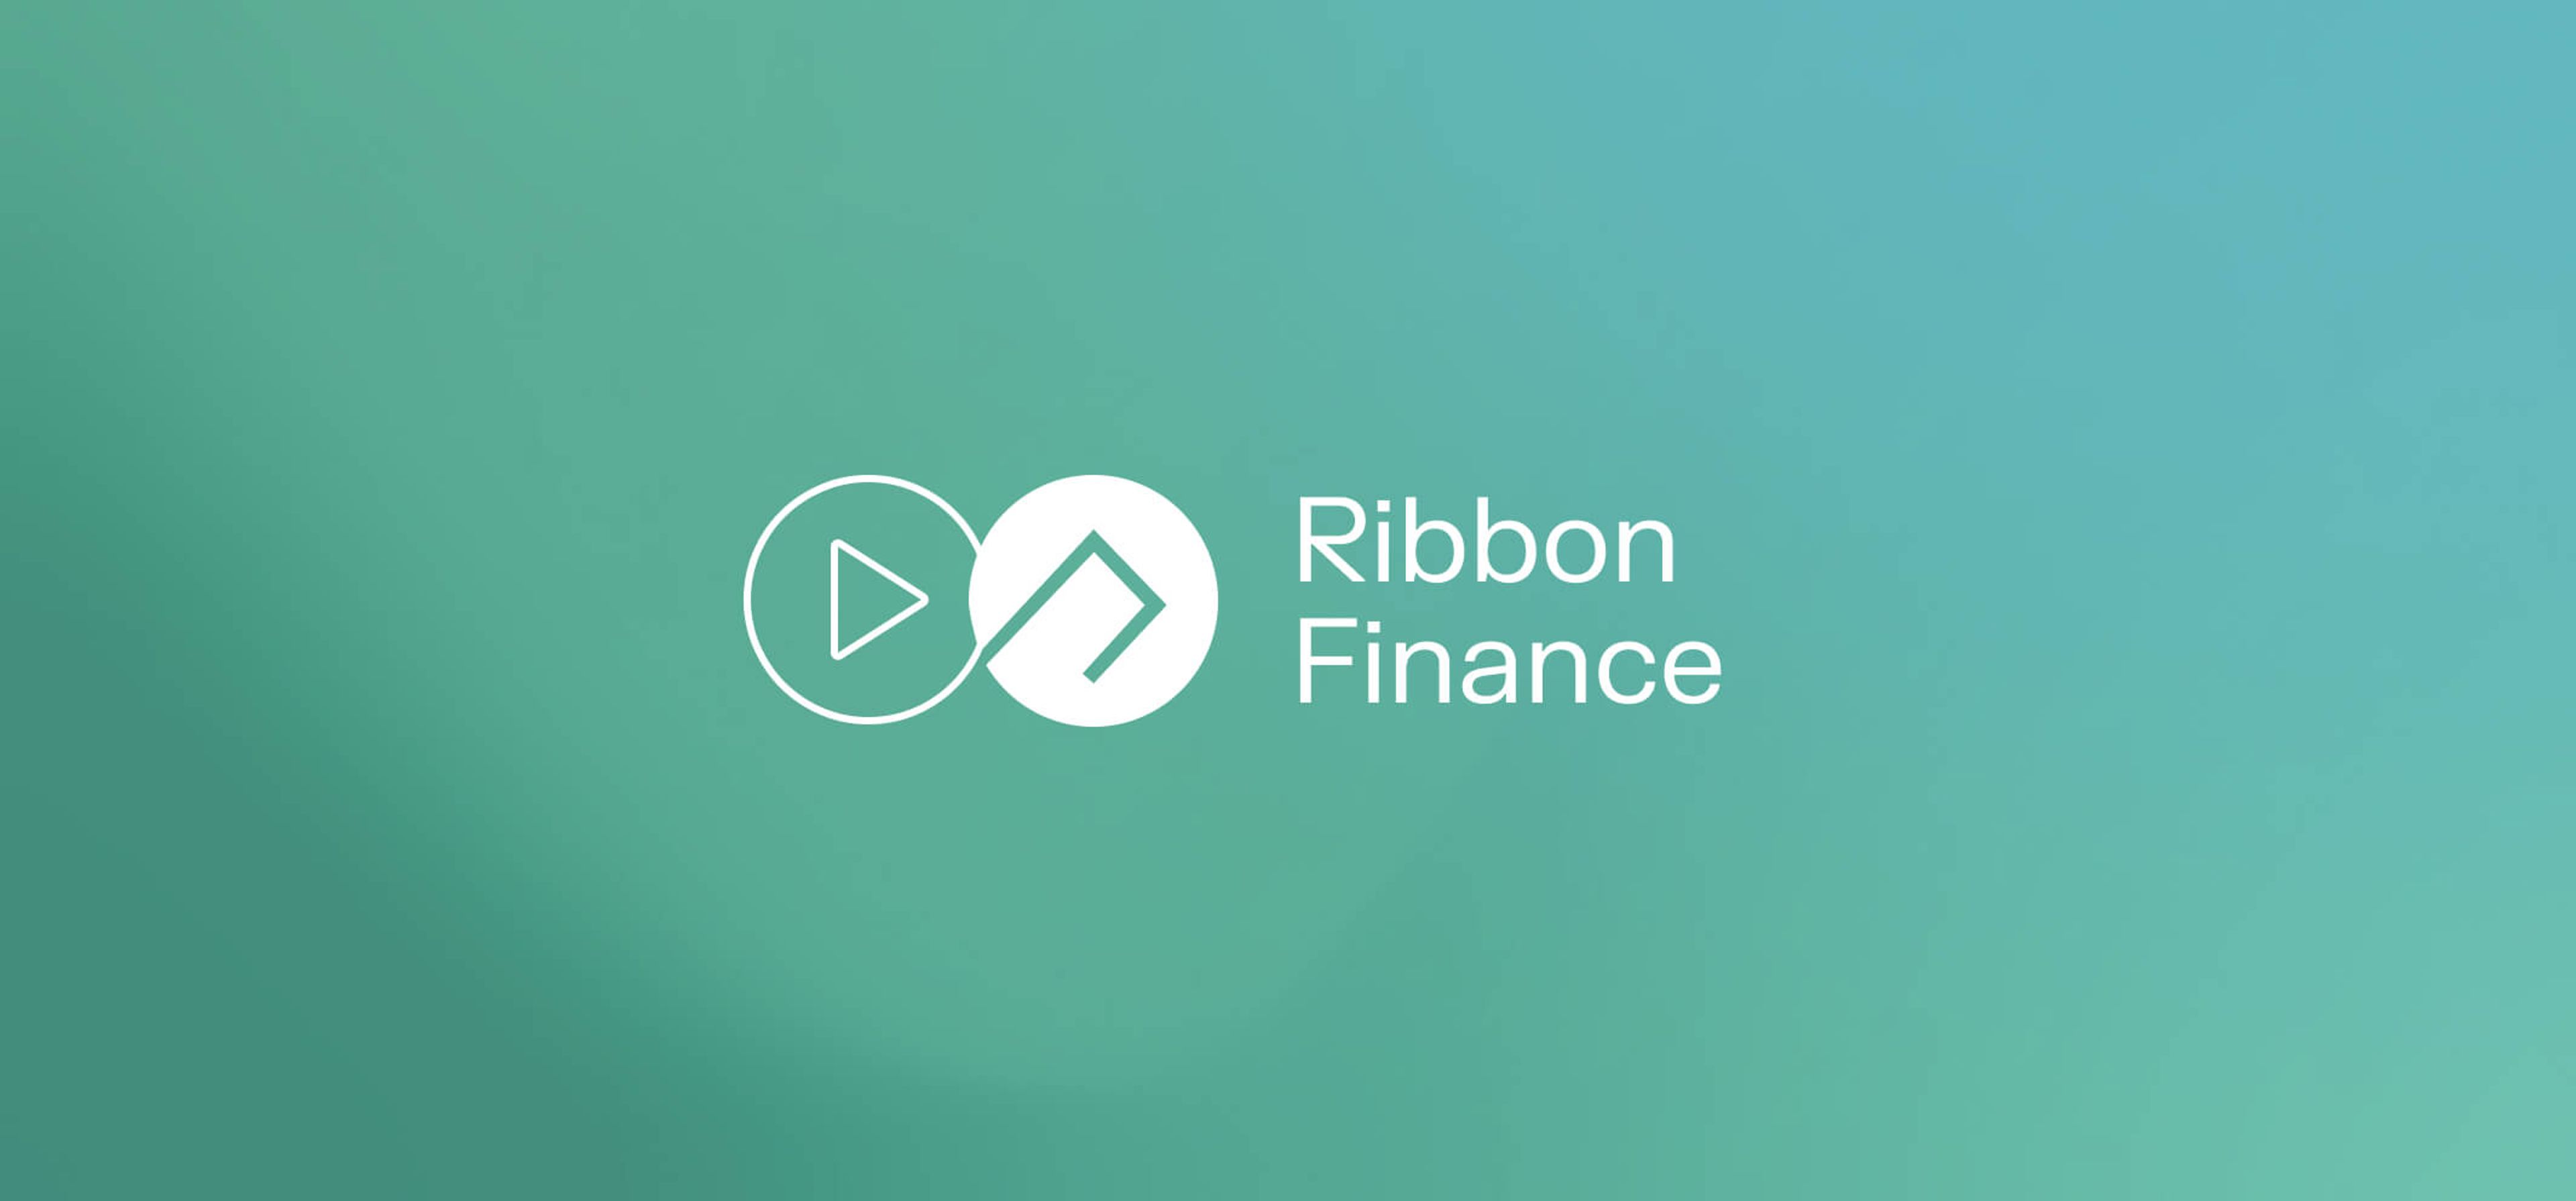 Ribbon Finance – 15-minute fundamentals